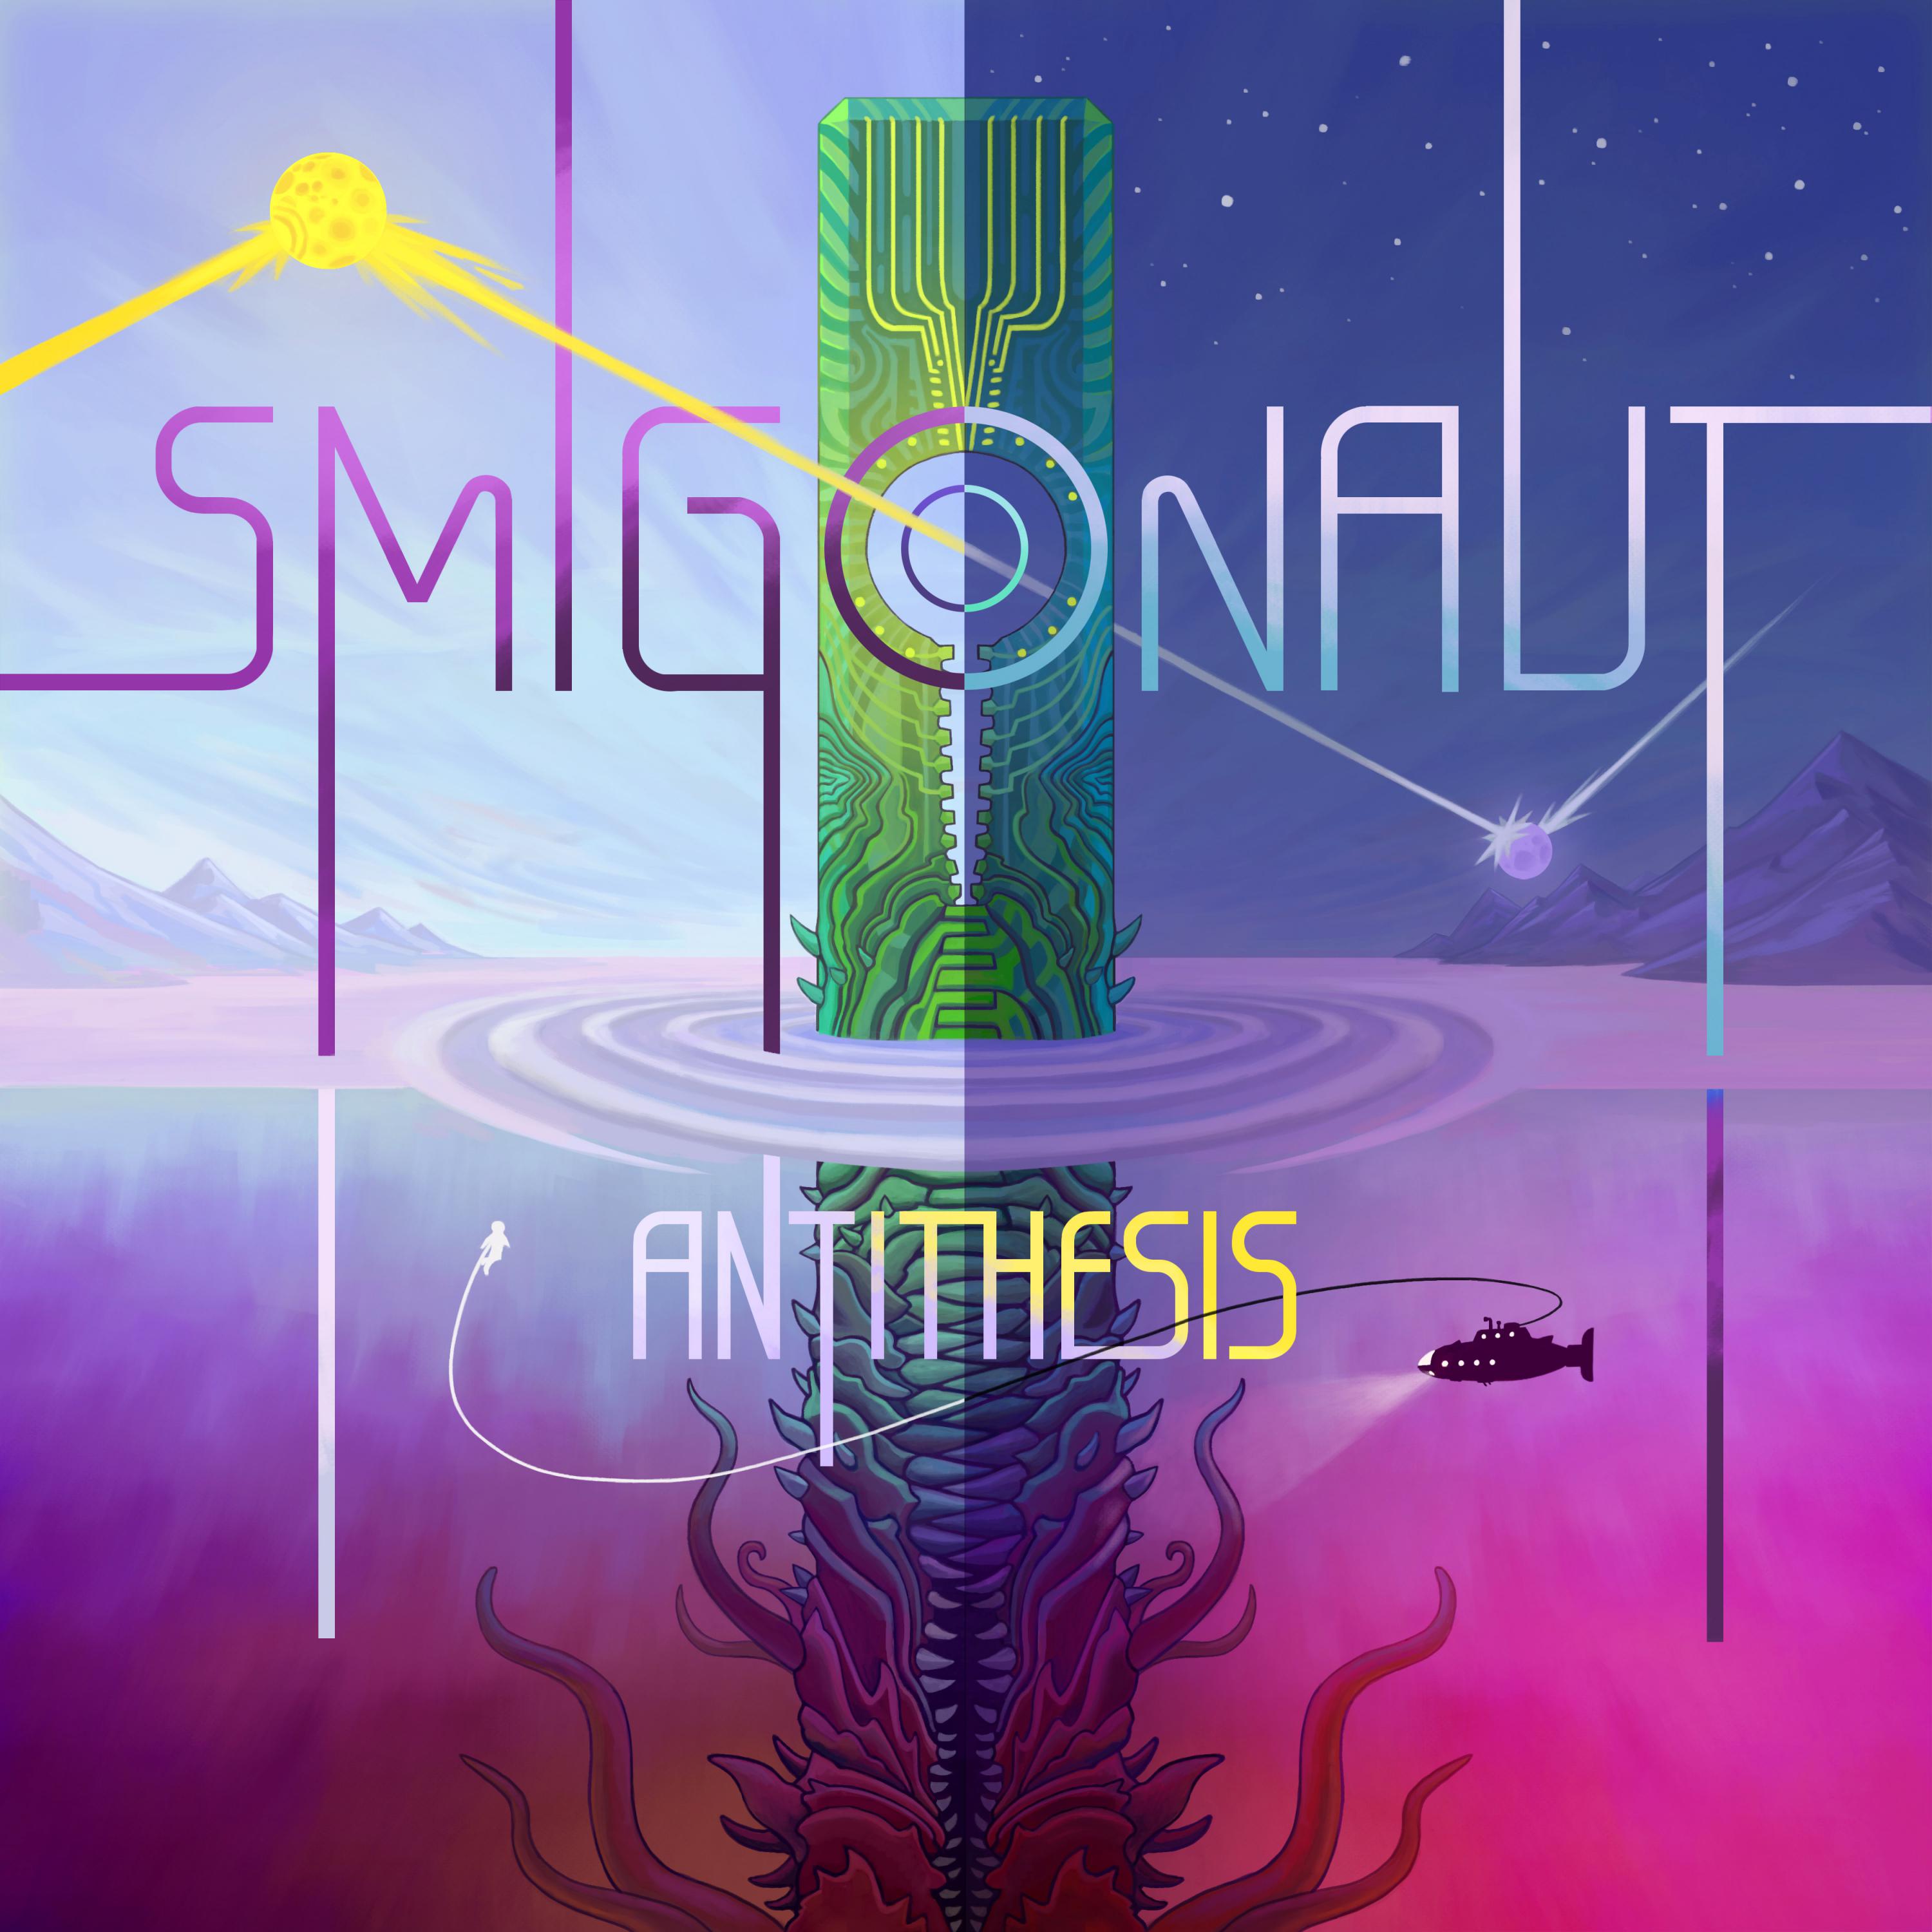 Smigonaut - Sweet Tooth